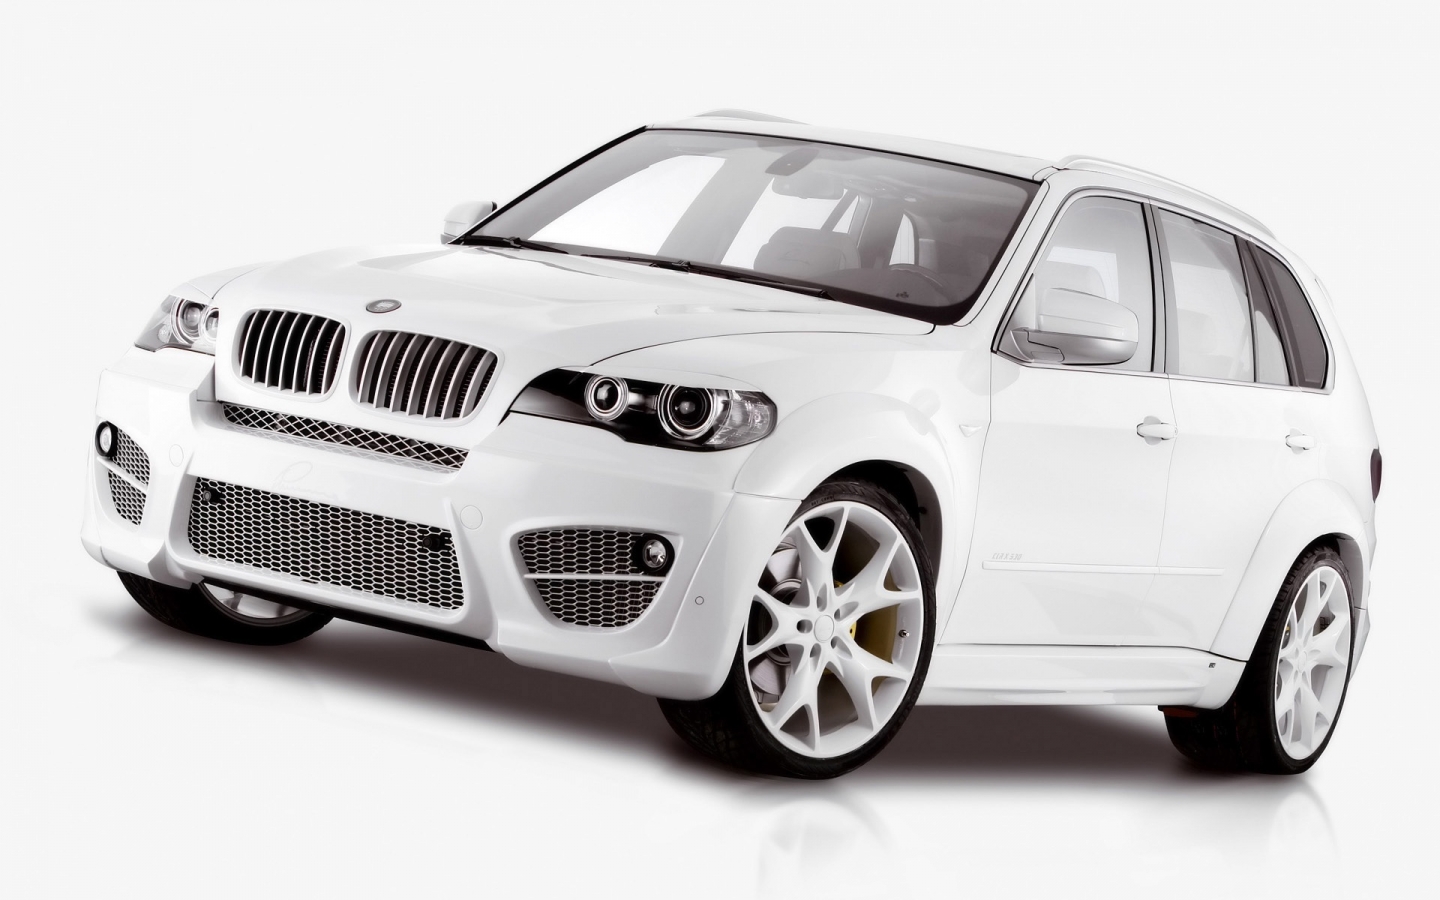 BMW CLR X530 Lumma Design 2008 for 1440 x 900 widescreen resolution